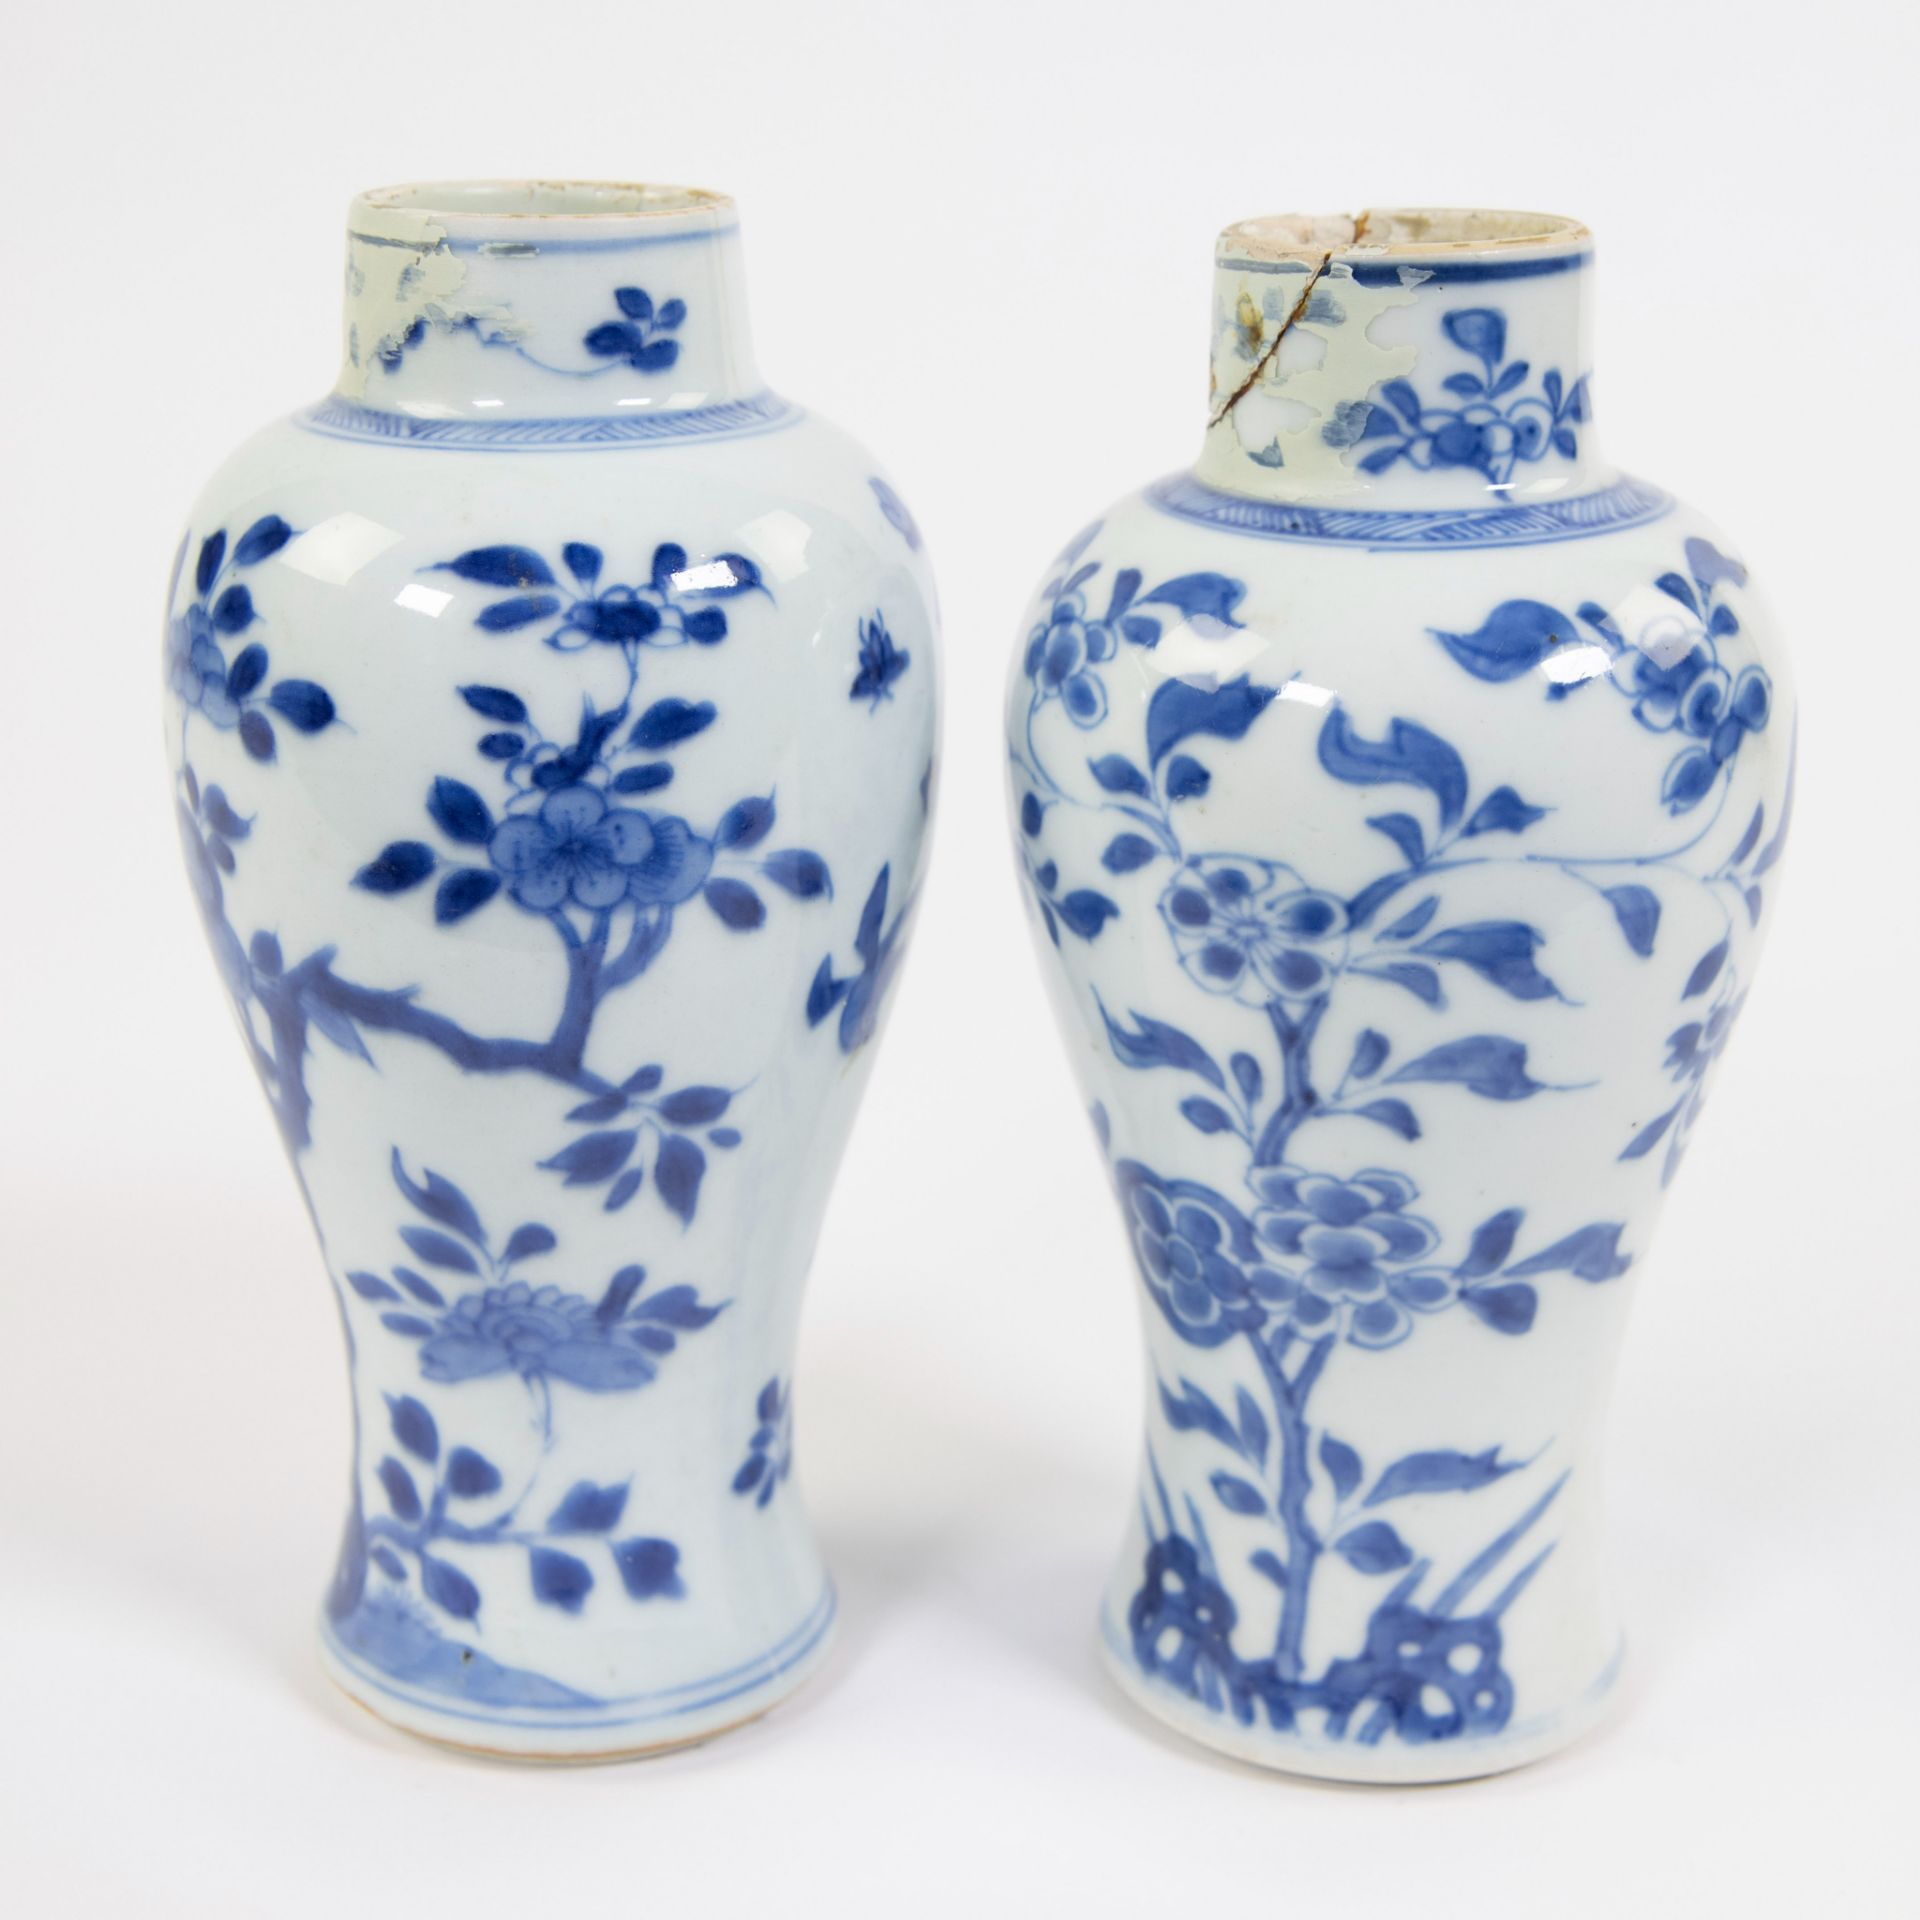 Two Kangxi porcelain vases, China, early 18th century - Image 3 of 6